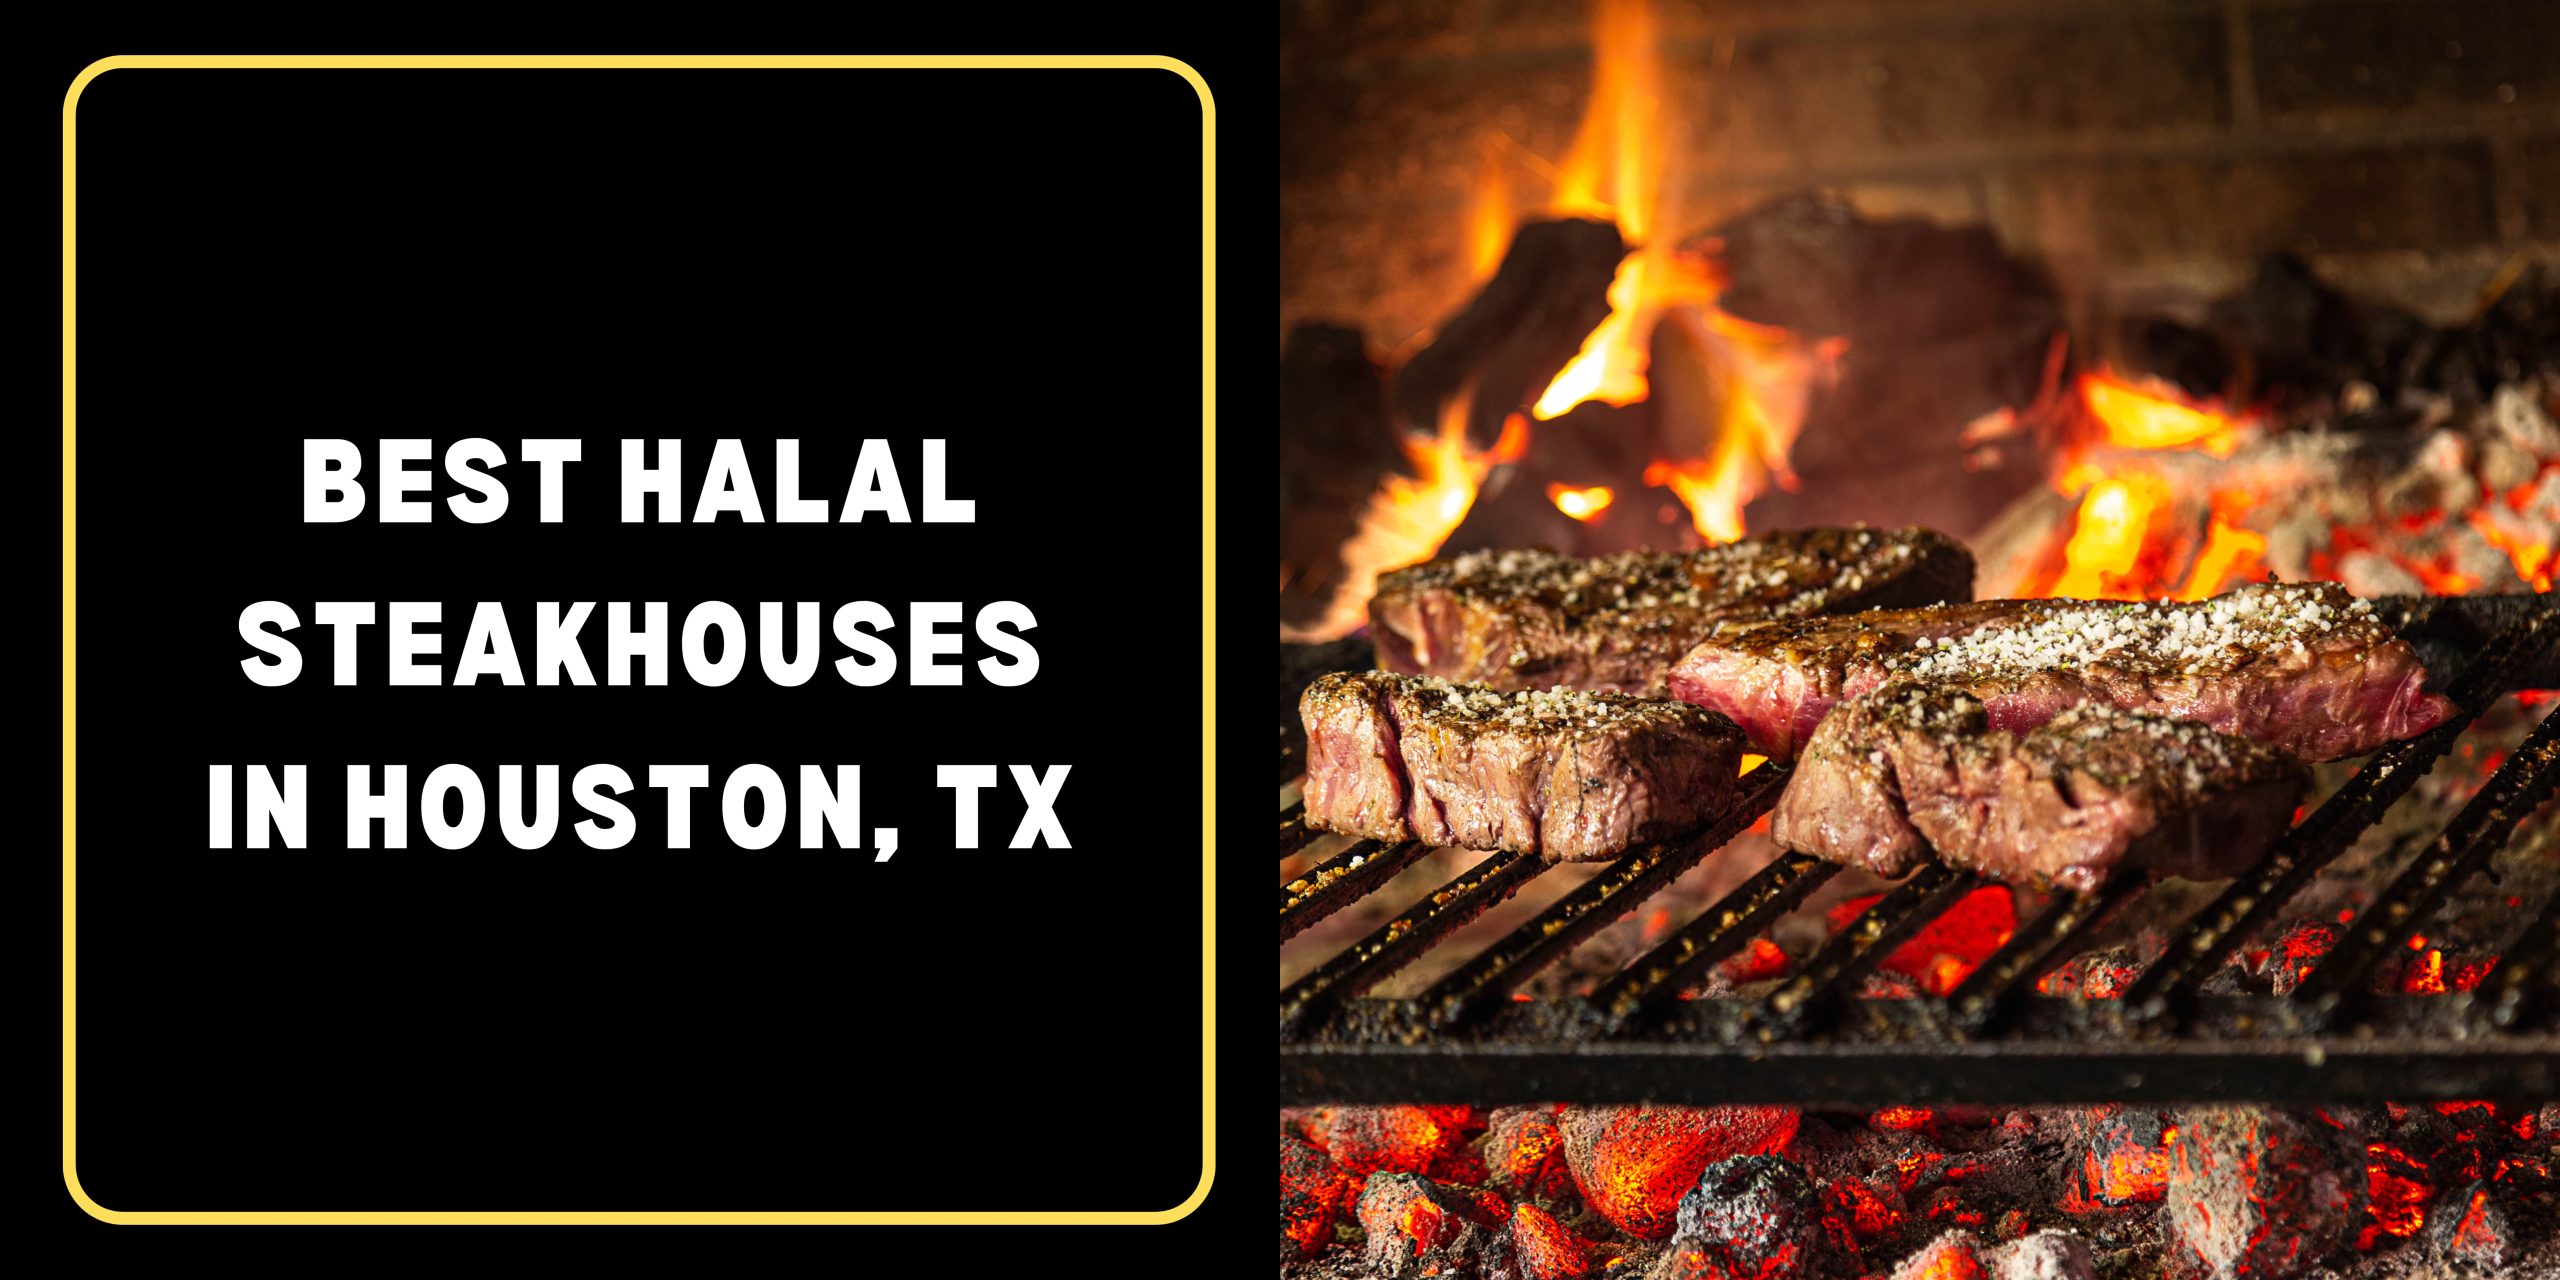 Halal Steak House